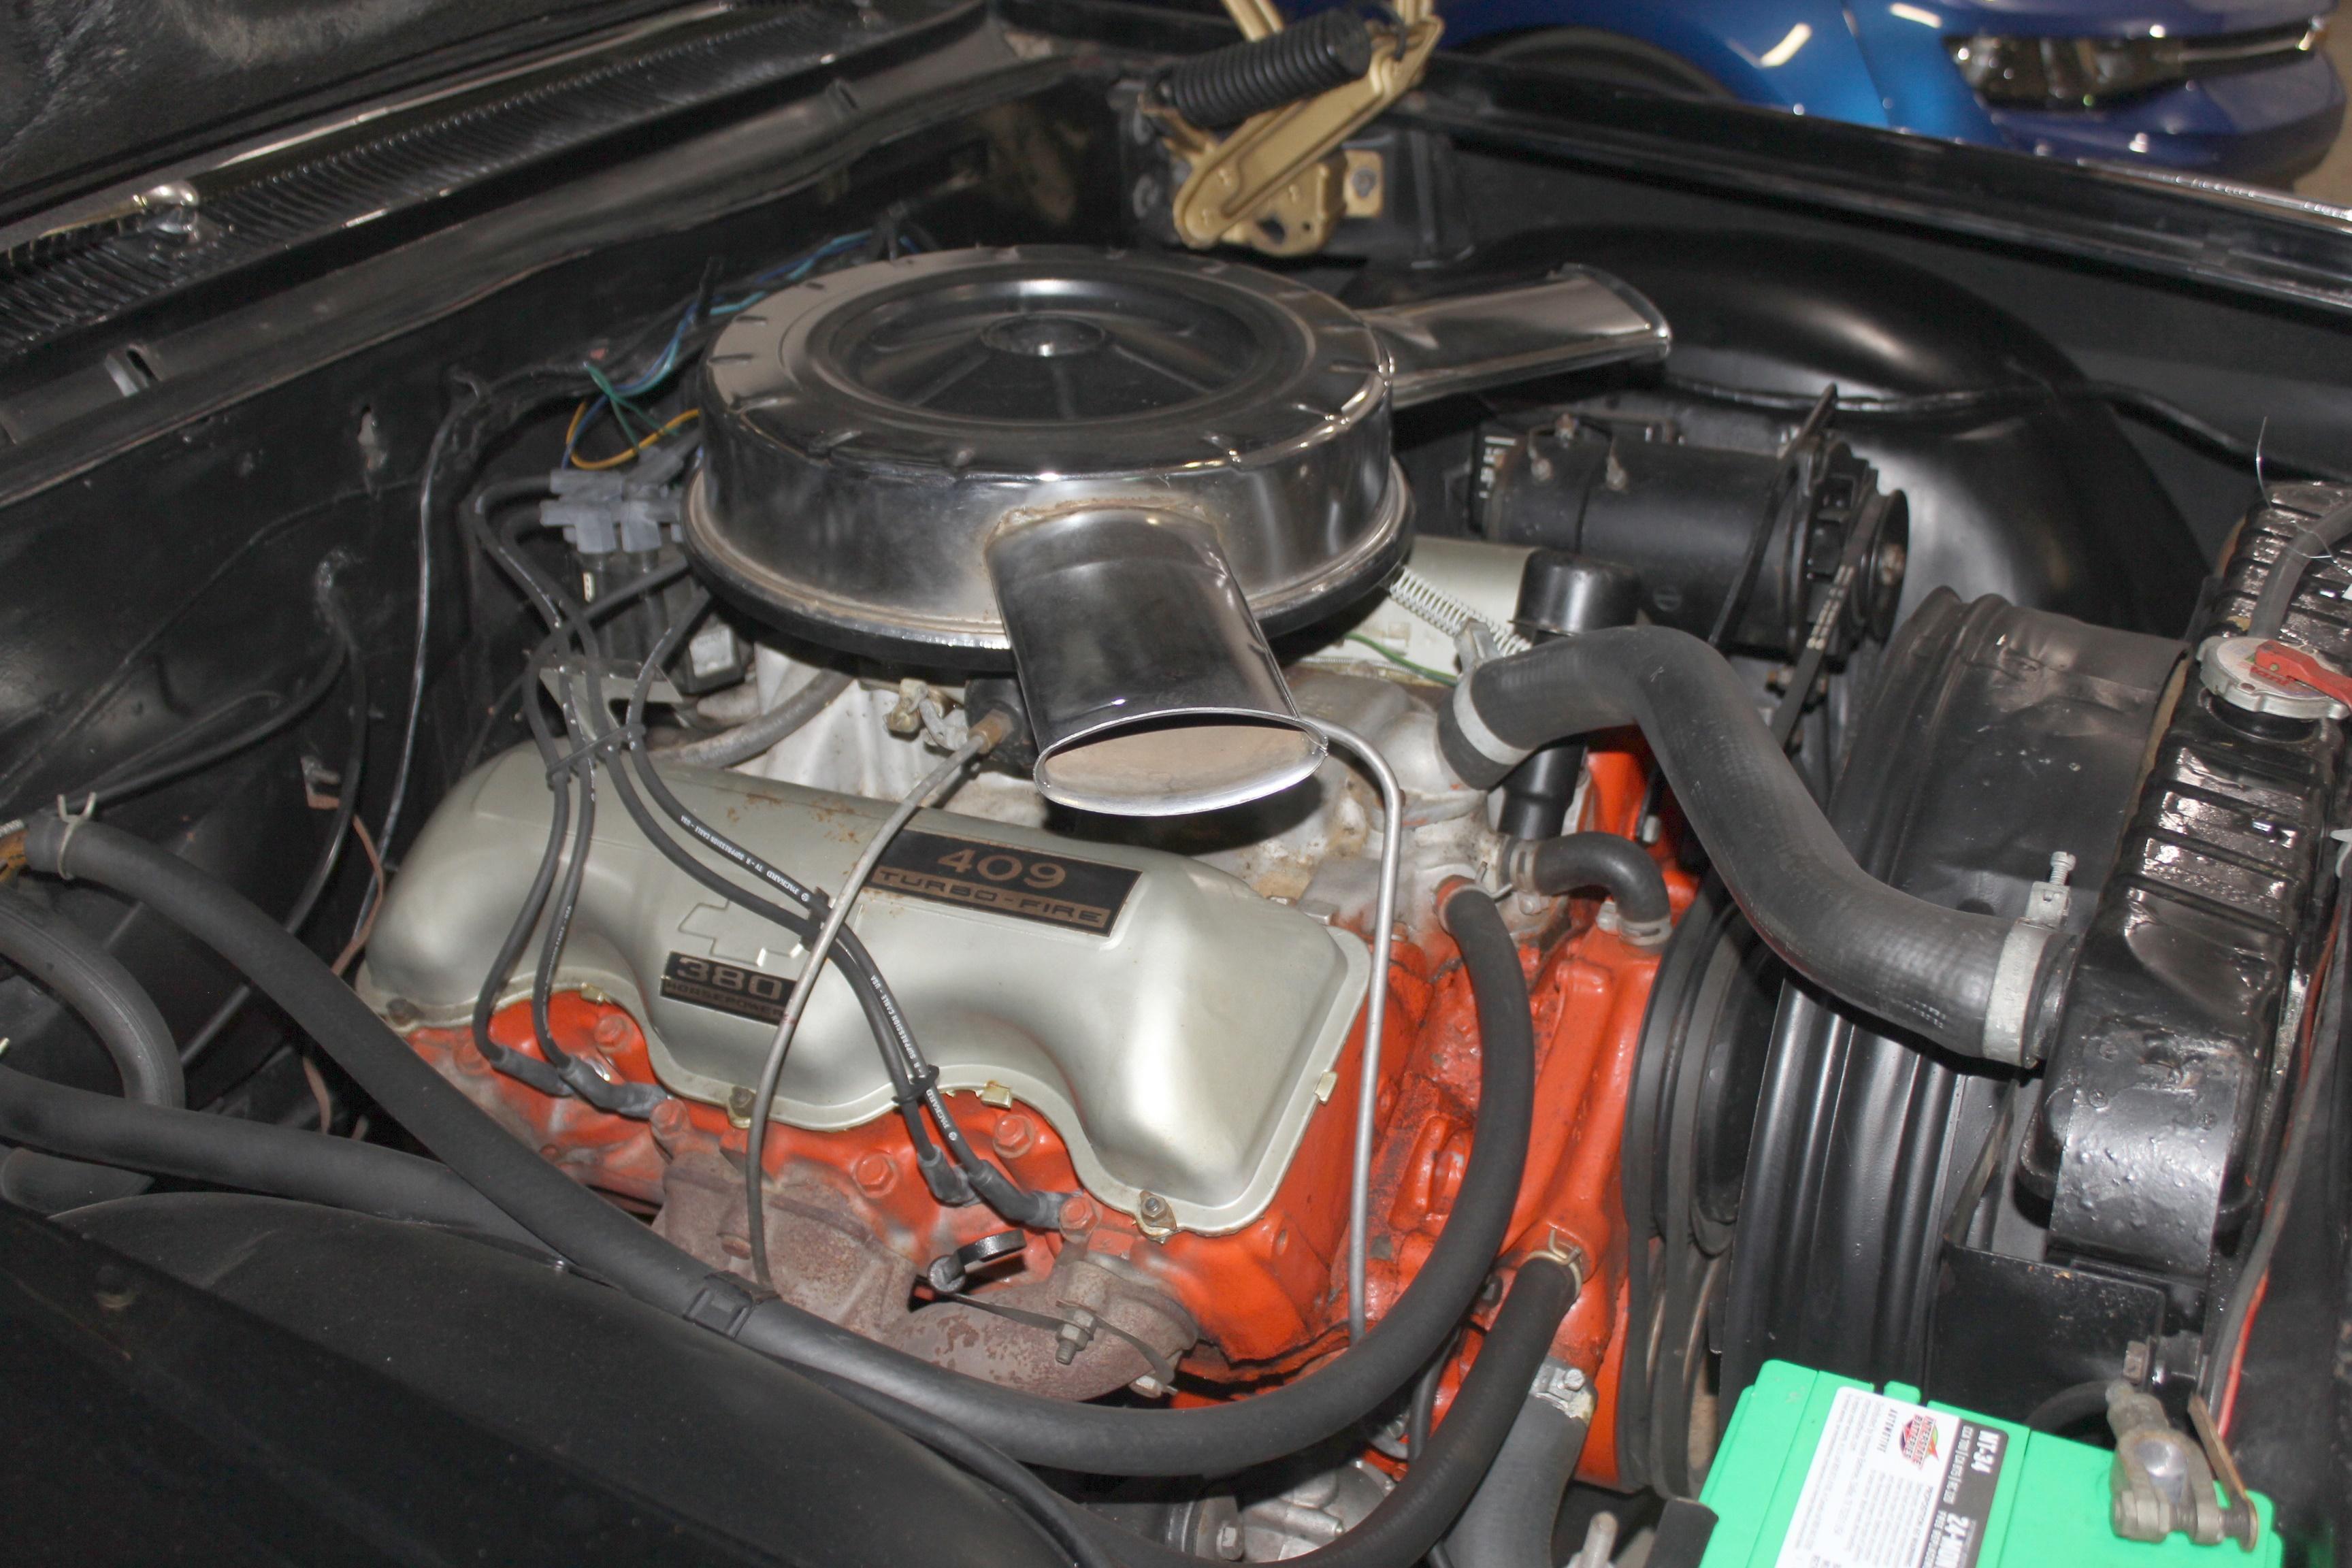 1962 Chevy Impala SS, 409 engine, 4 speed trans